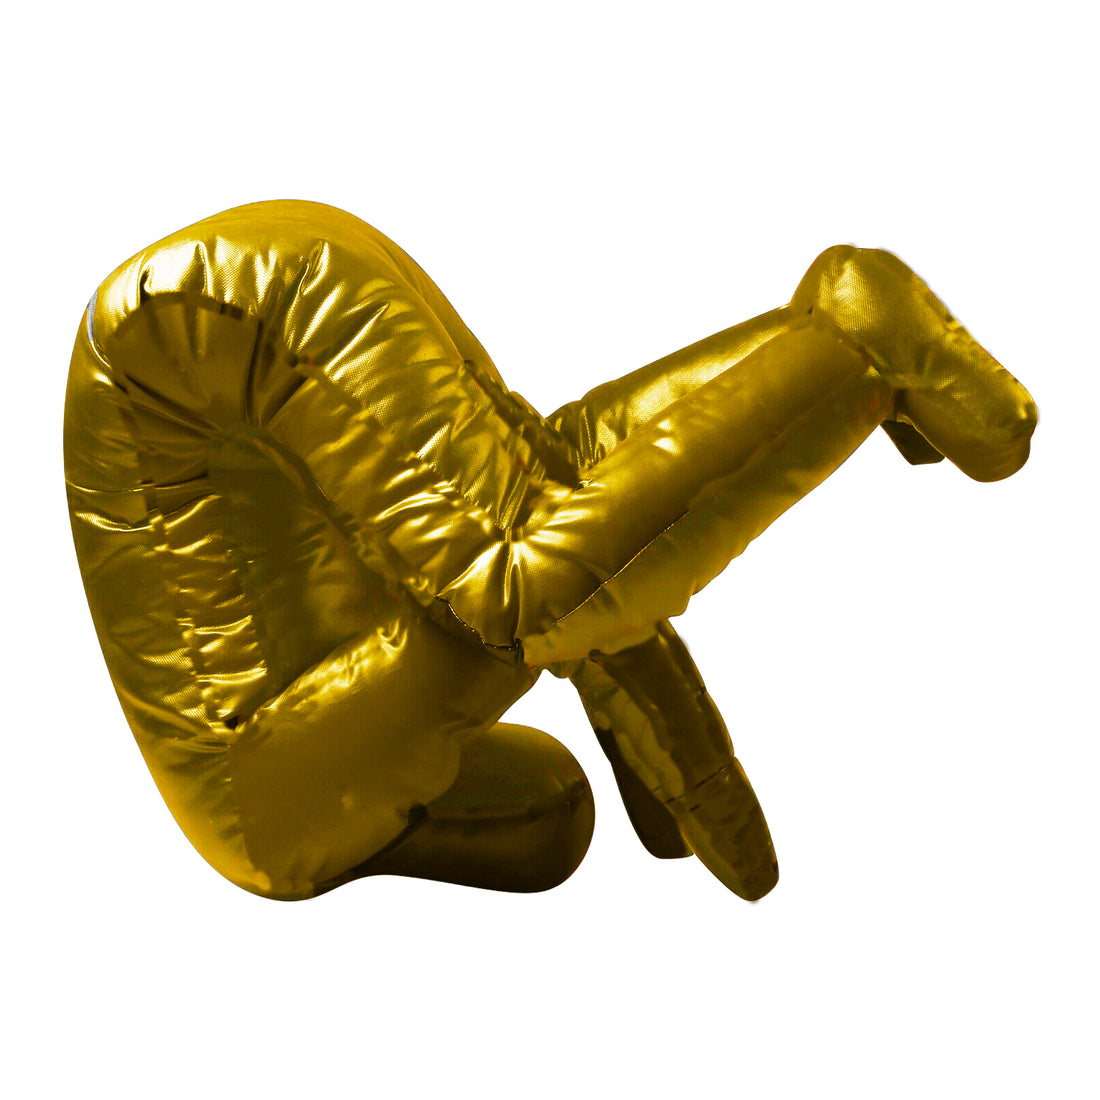 Special Limited Edition Brazilian Jiu Jitsu Premium Leather Grappling Dummy Boxing judo MMA - Gold- Professional Range - DEFENDING POSITION